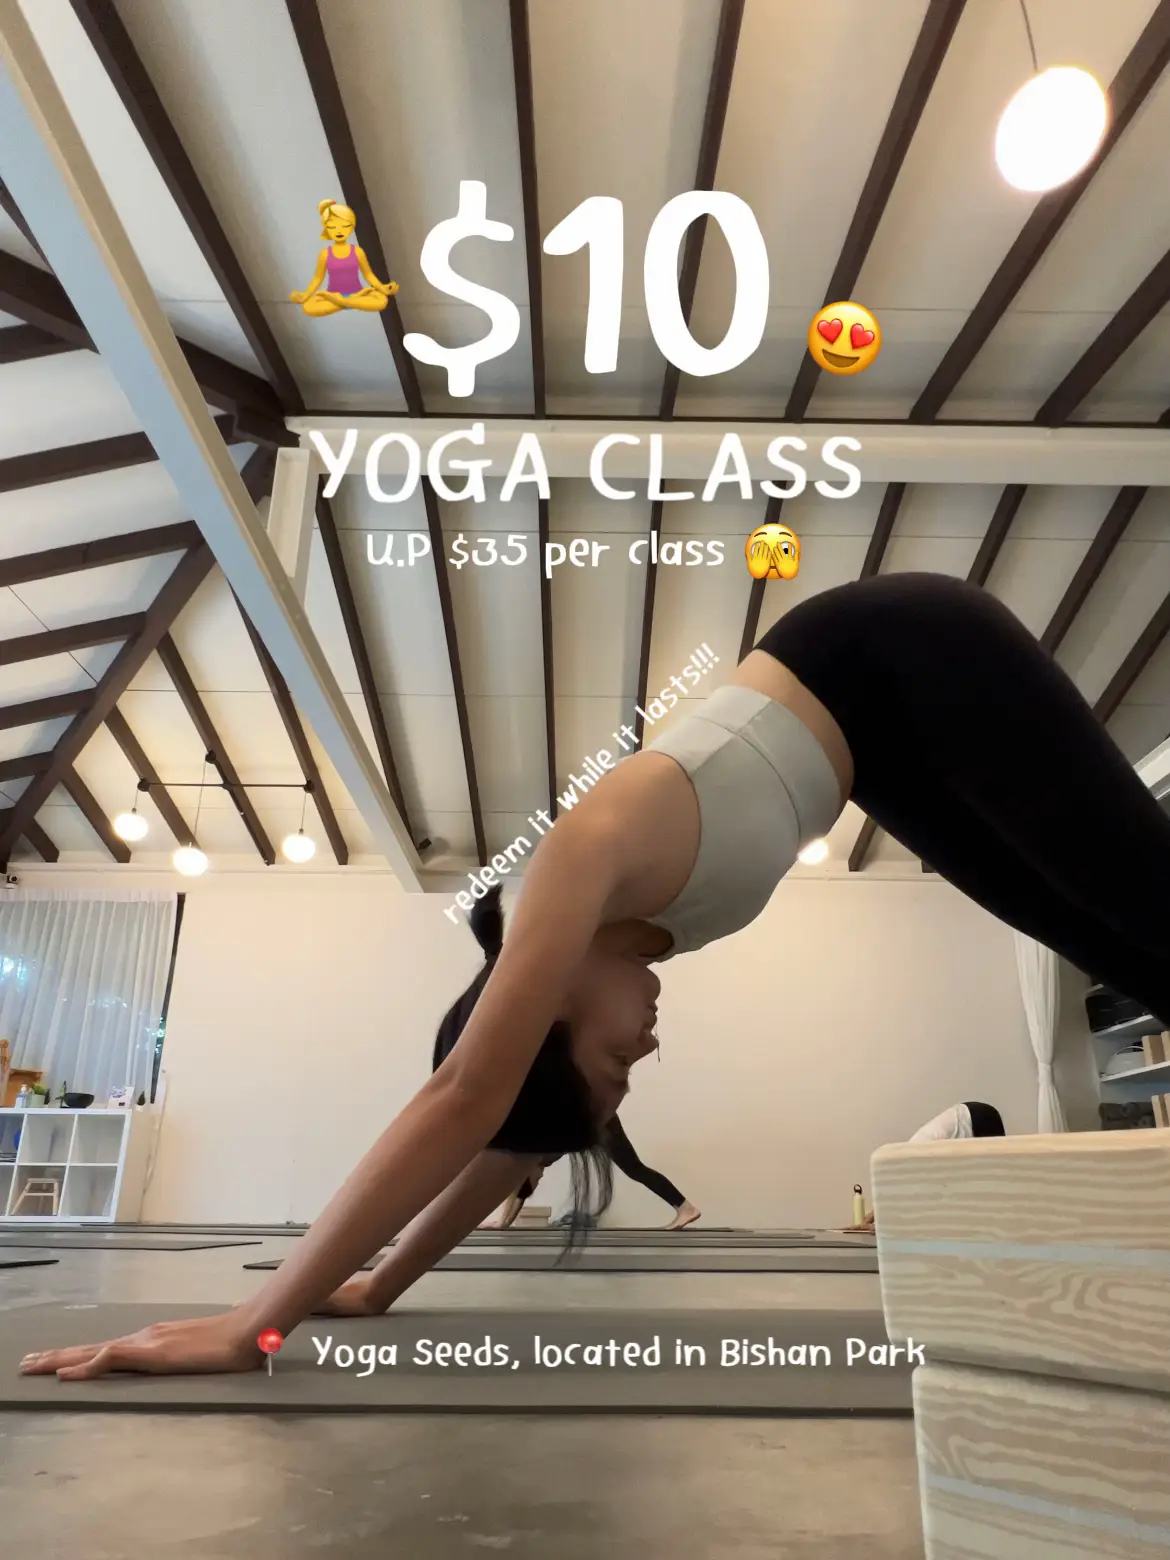 $10 HATHA YOGA CLASS 🤩 + benefits of yoga 🧘‍♀️'s images(0)